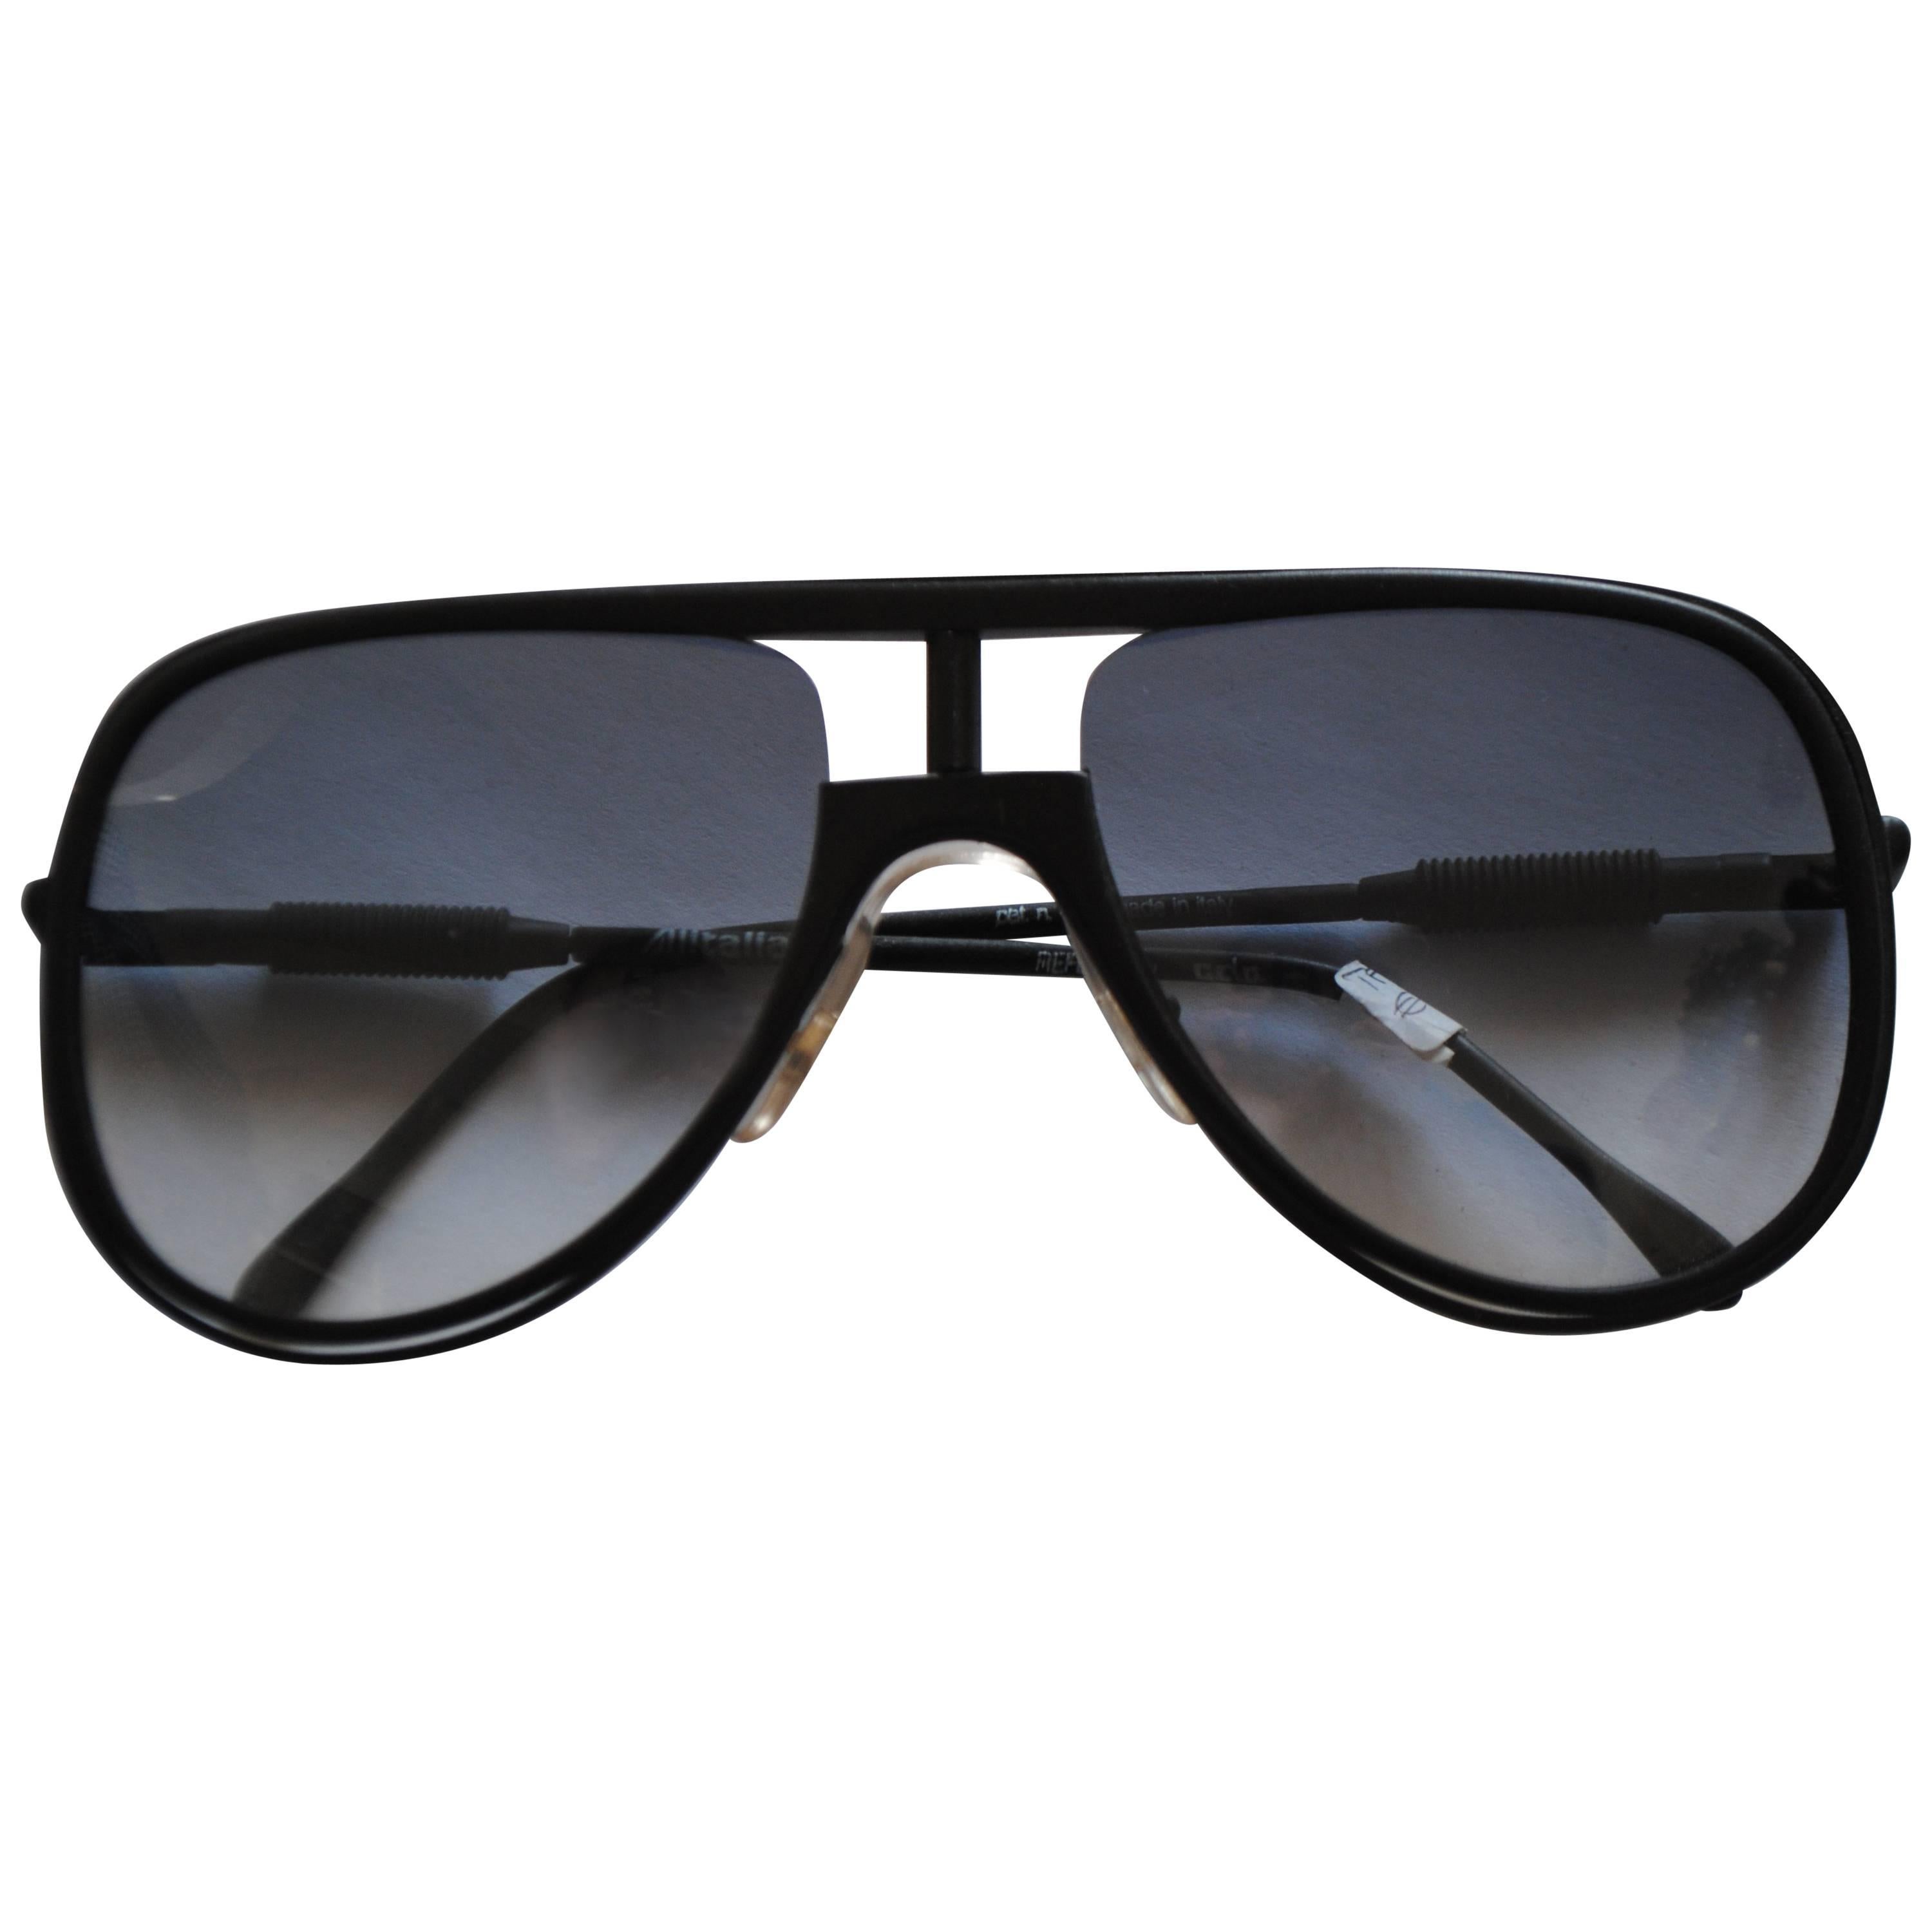 1990s Alitalia Black Sunglasses